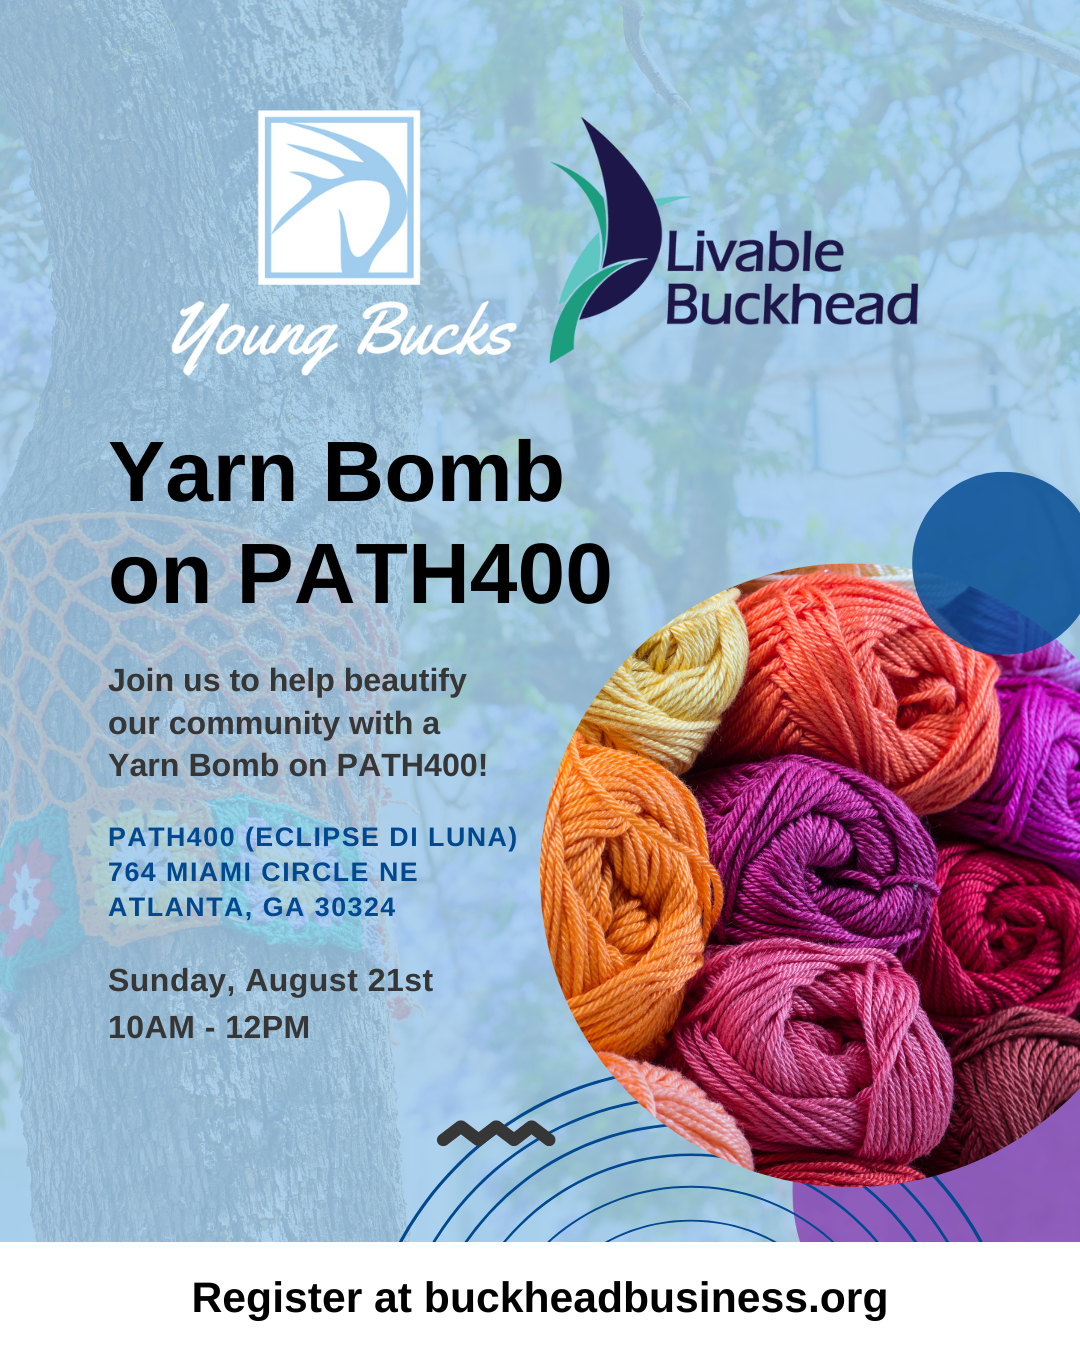 Livable Buckhead Young Bucks Yarn Bomb